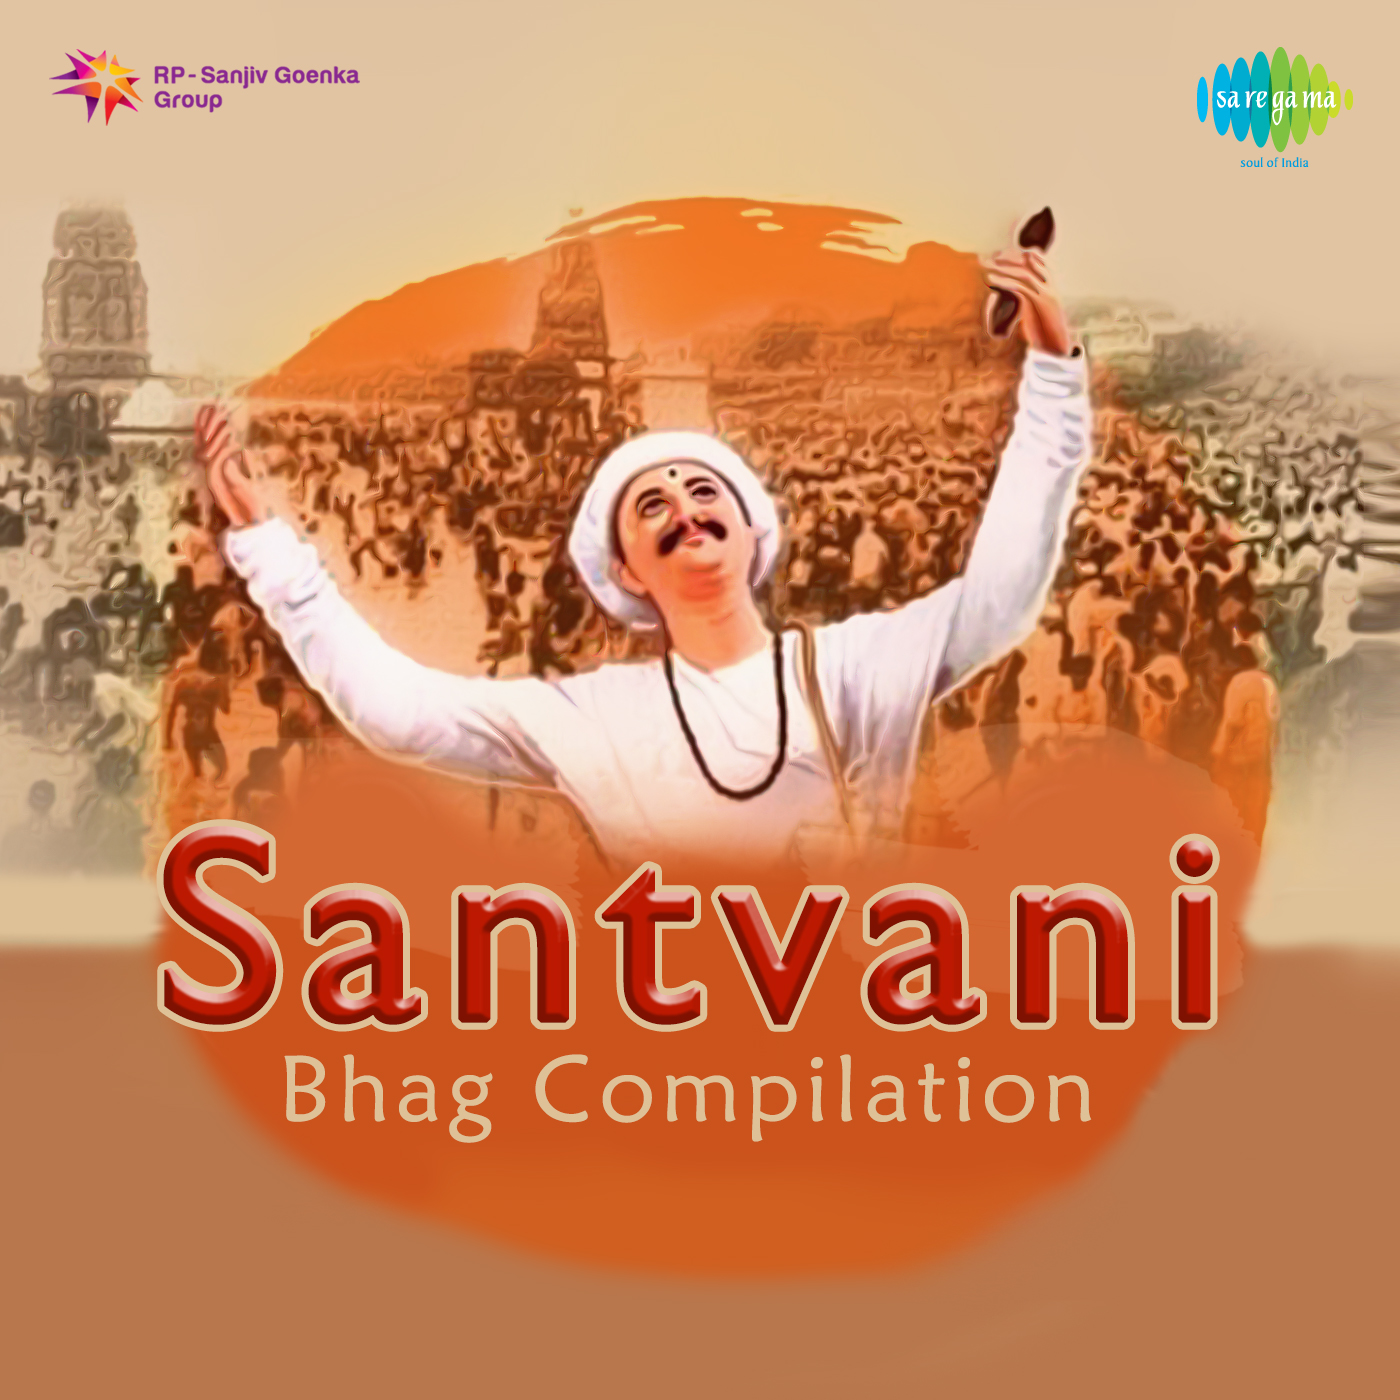 Santvani Bhag Compilation